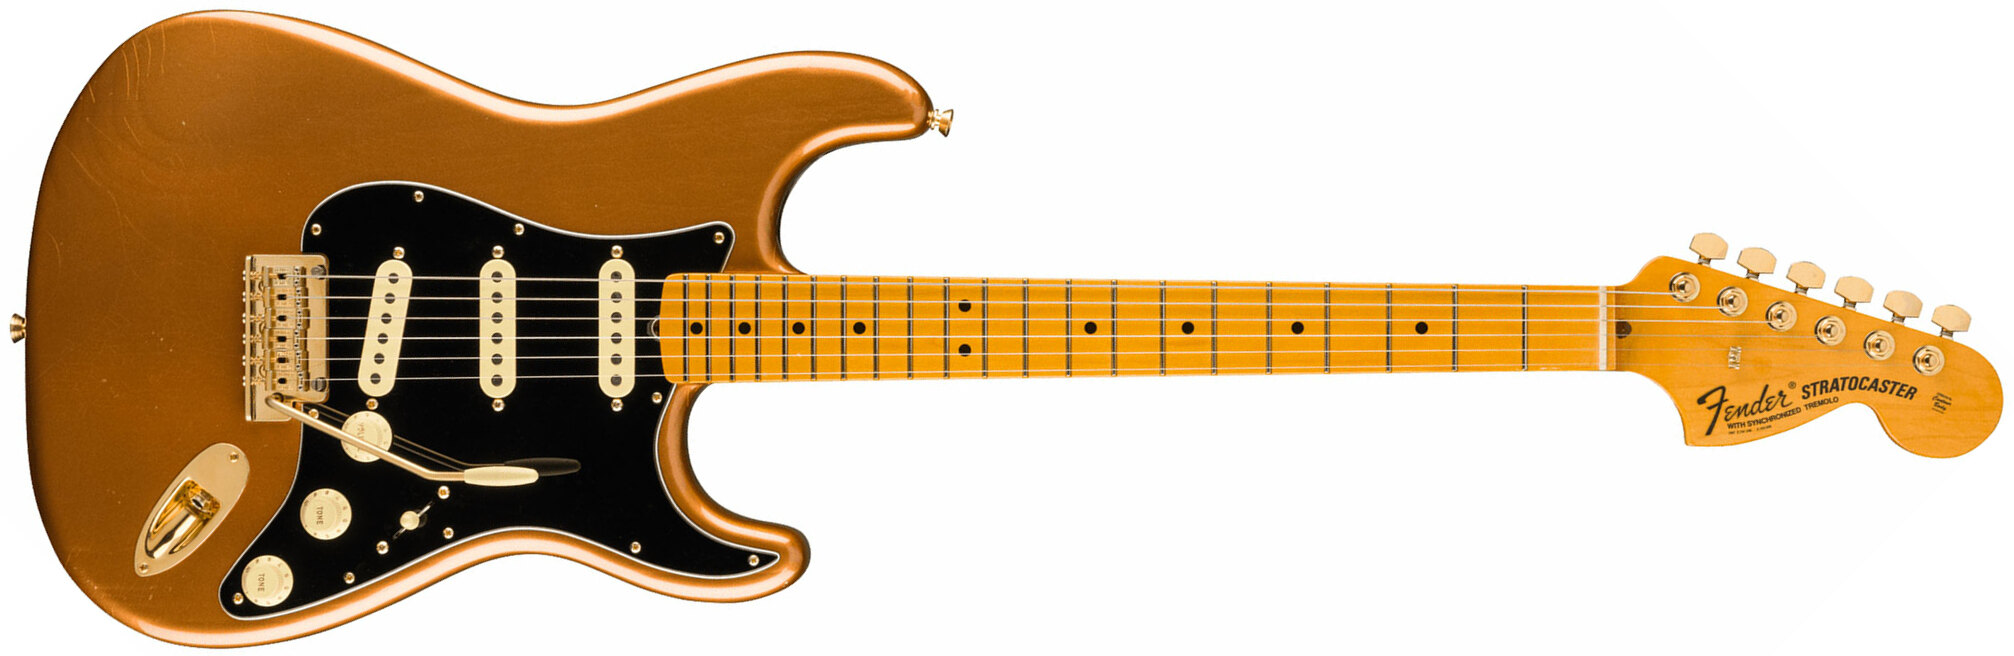 Fender Bruno Mars Strat Usa Signature 3s Trem Mn - Mars Mocha - Signature electric guitar - Main picture